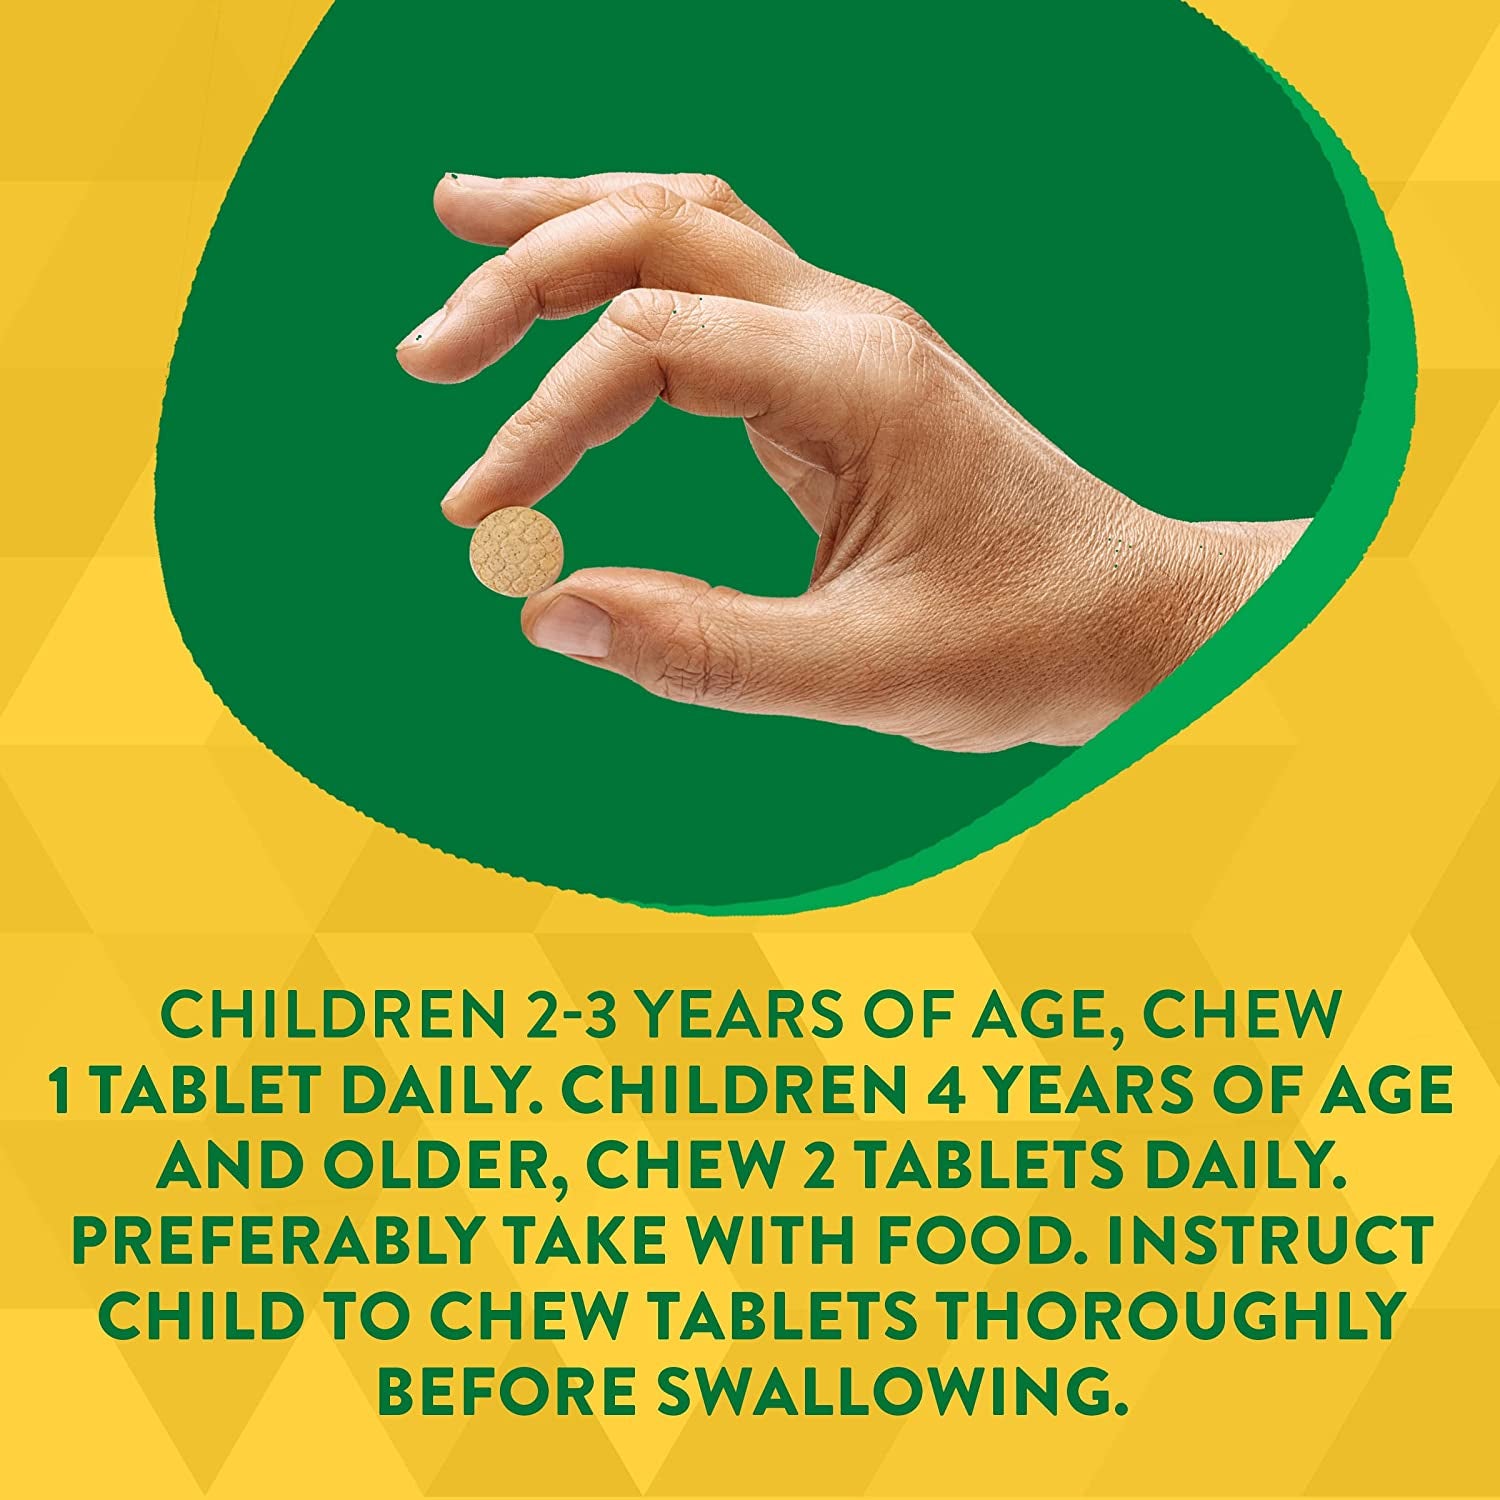 Alive! Kids Chewable Multivitamin, Gluten Free, 120 Chewable Tablets